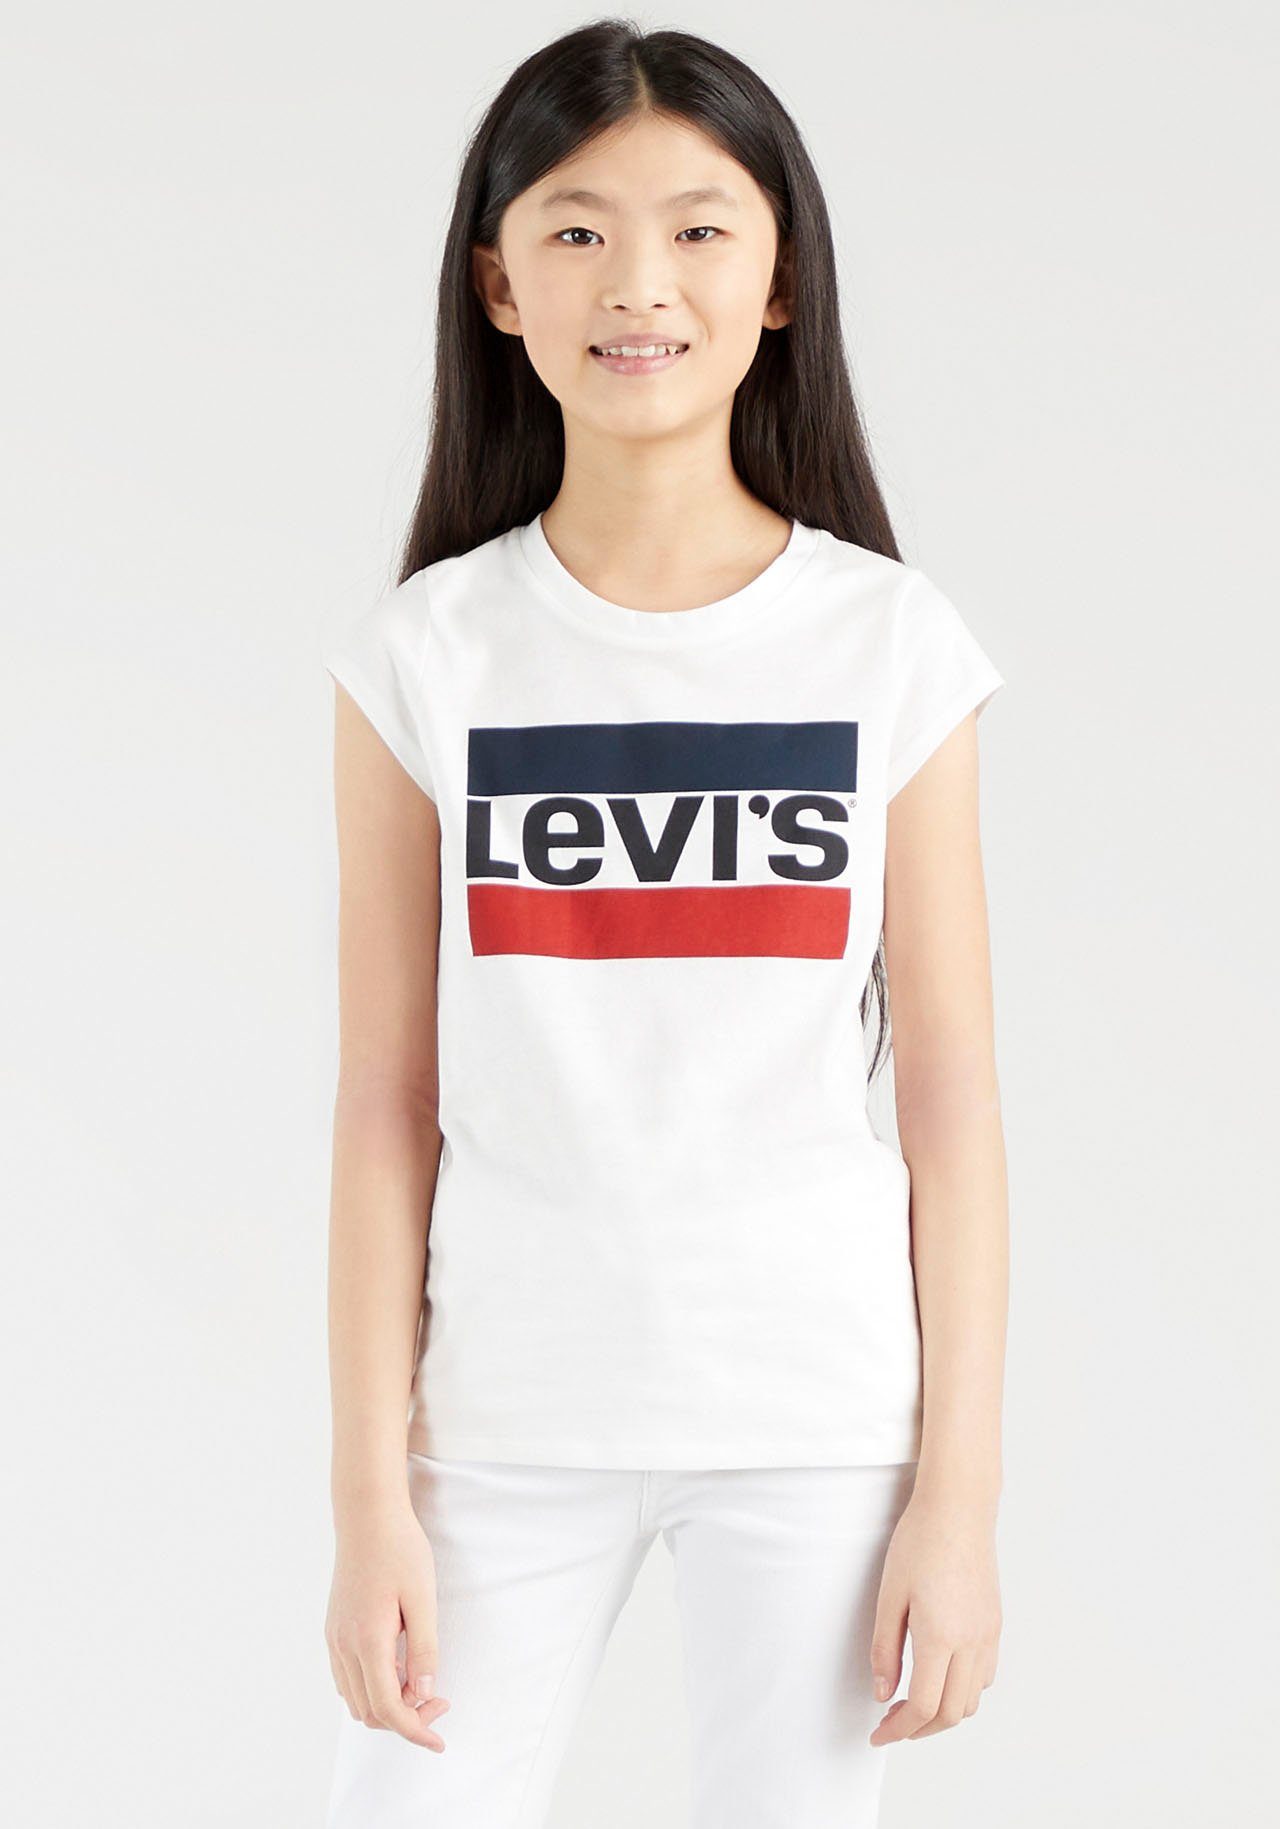 Voldoen Echt Viool Levi's Kidswear T-shirt for girls bestellen bij | OTTO